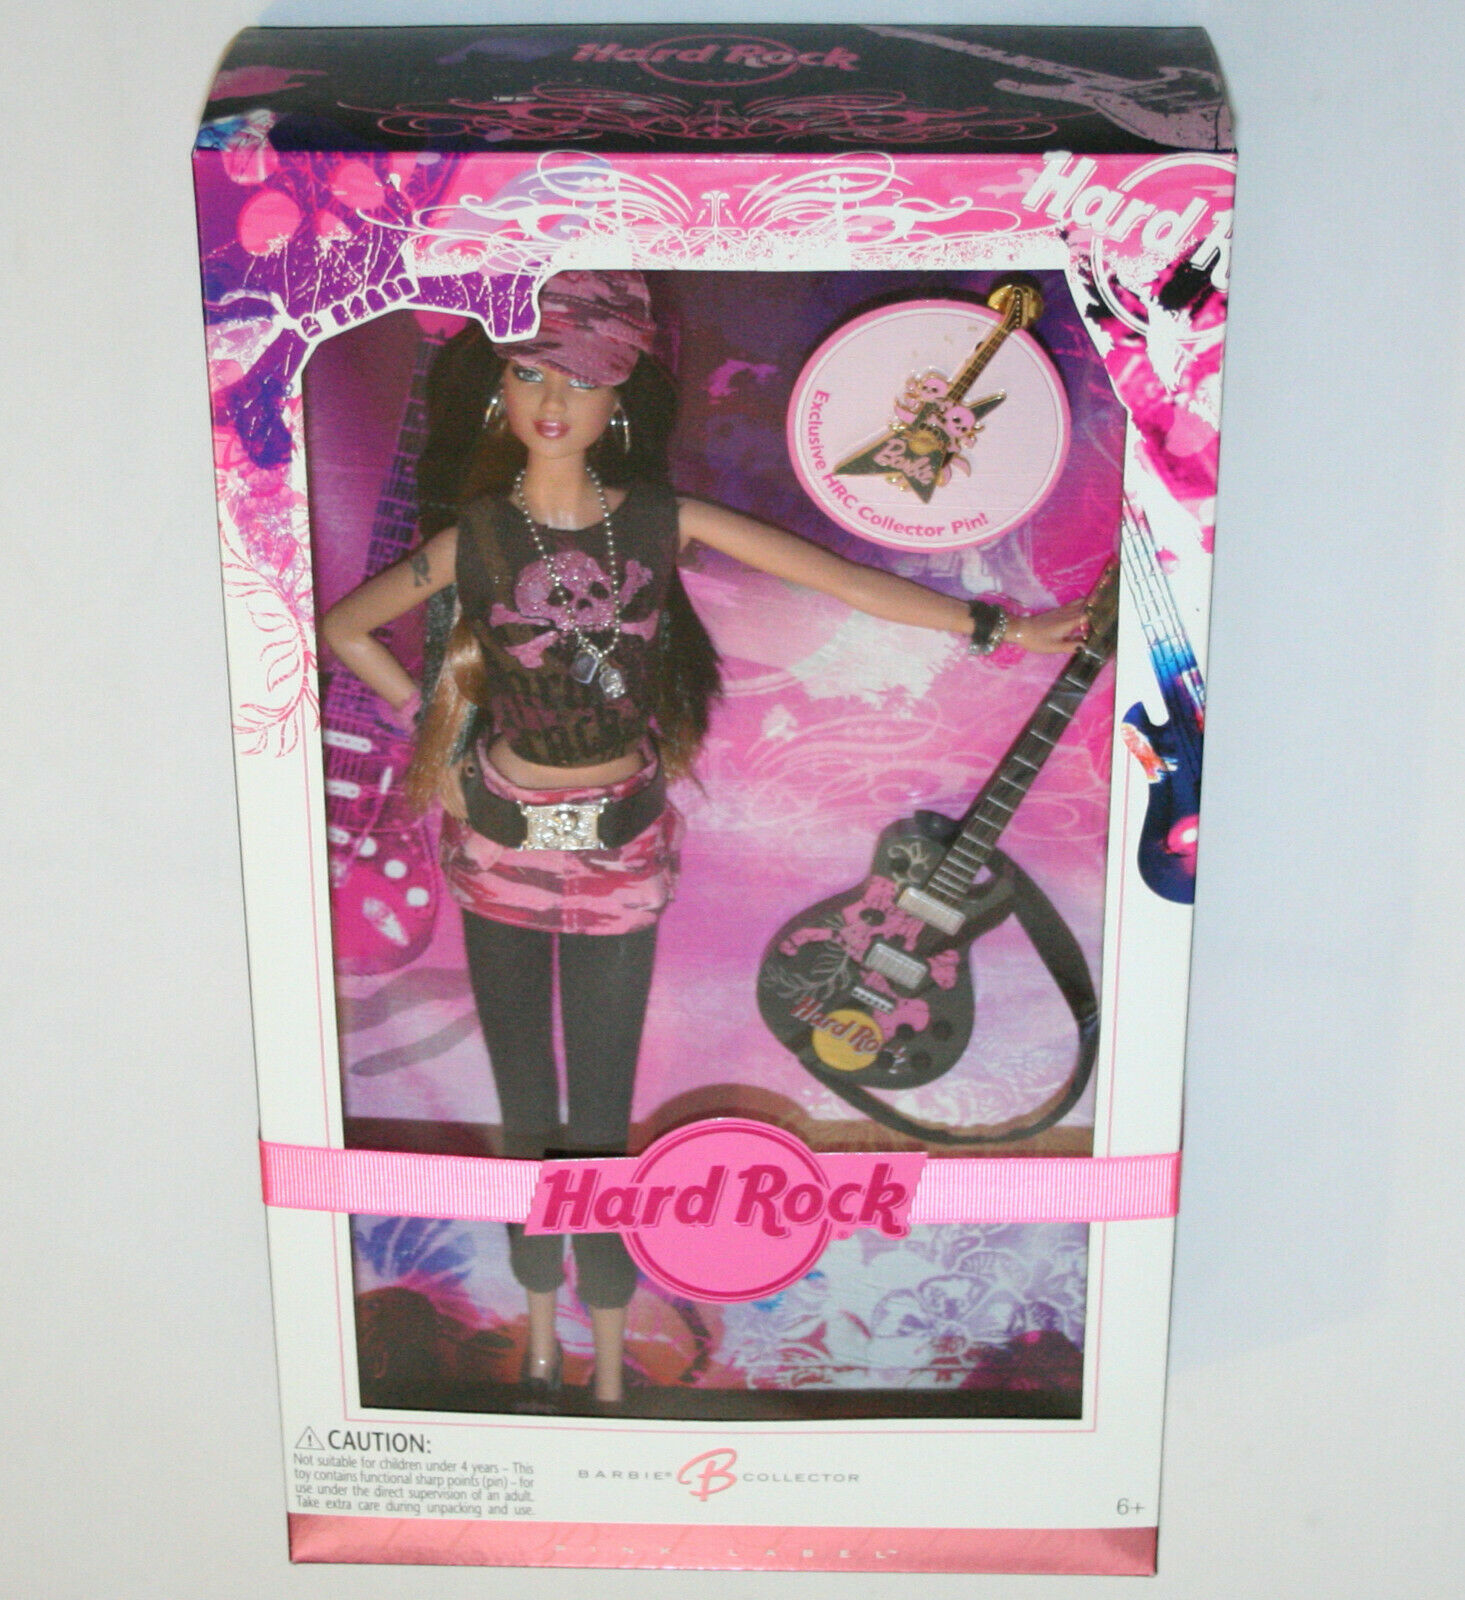 4th Hard Rock Cafe Barbie Doll 2006 W/ Guitar Pin Mattel Nrfb Pink Label L4175